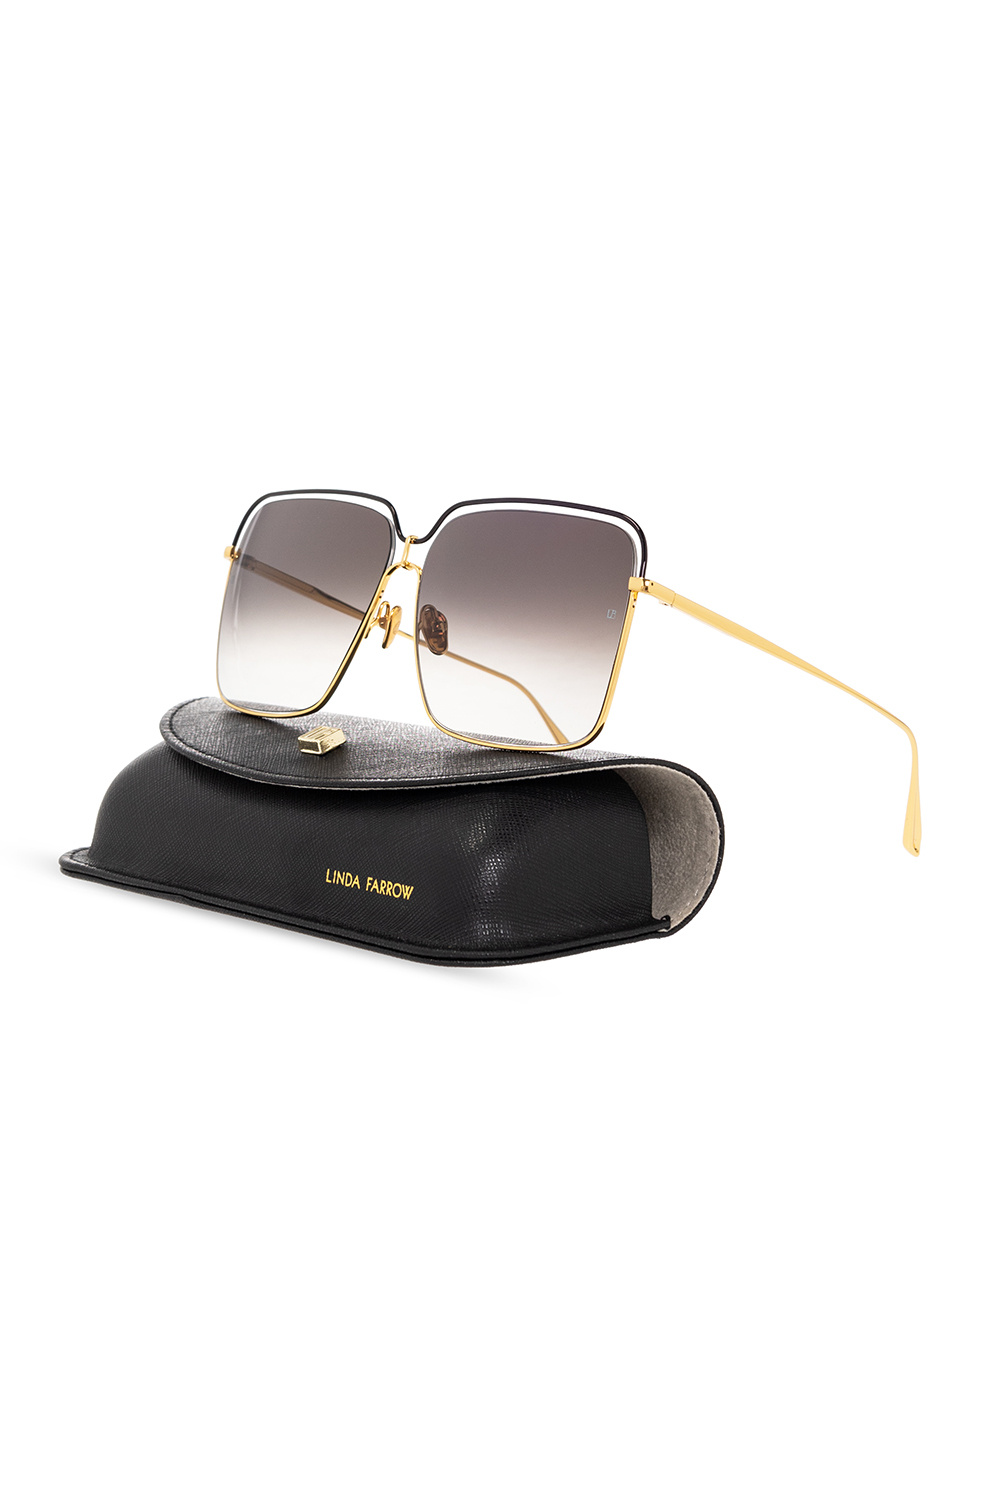 Linda Farrow ‘Marcia’ sunglasses